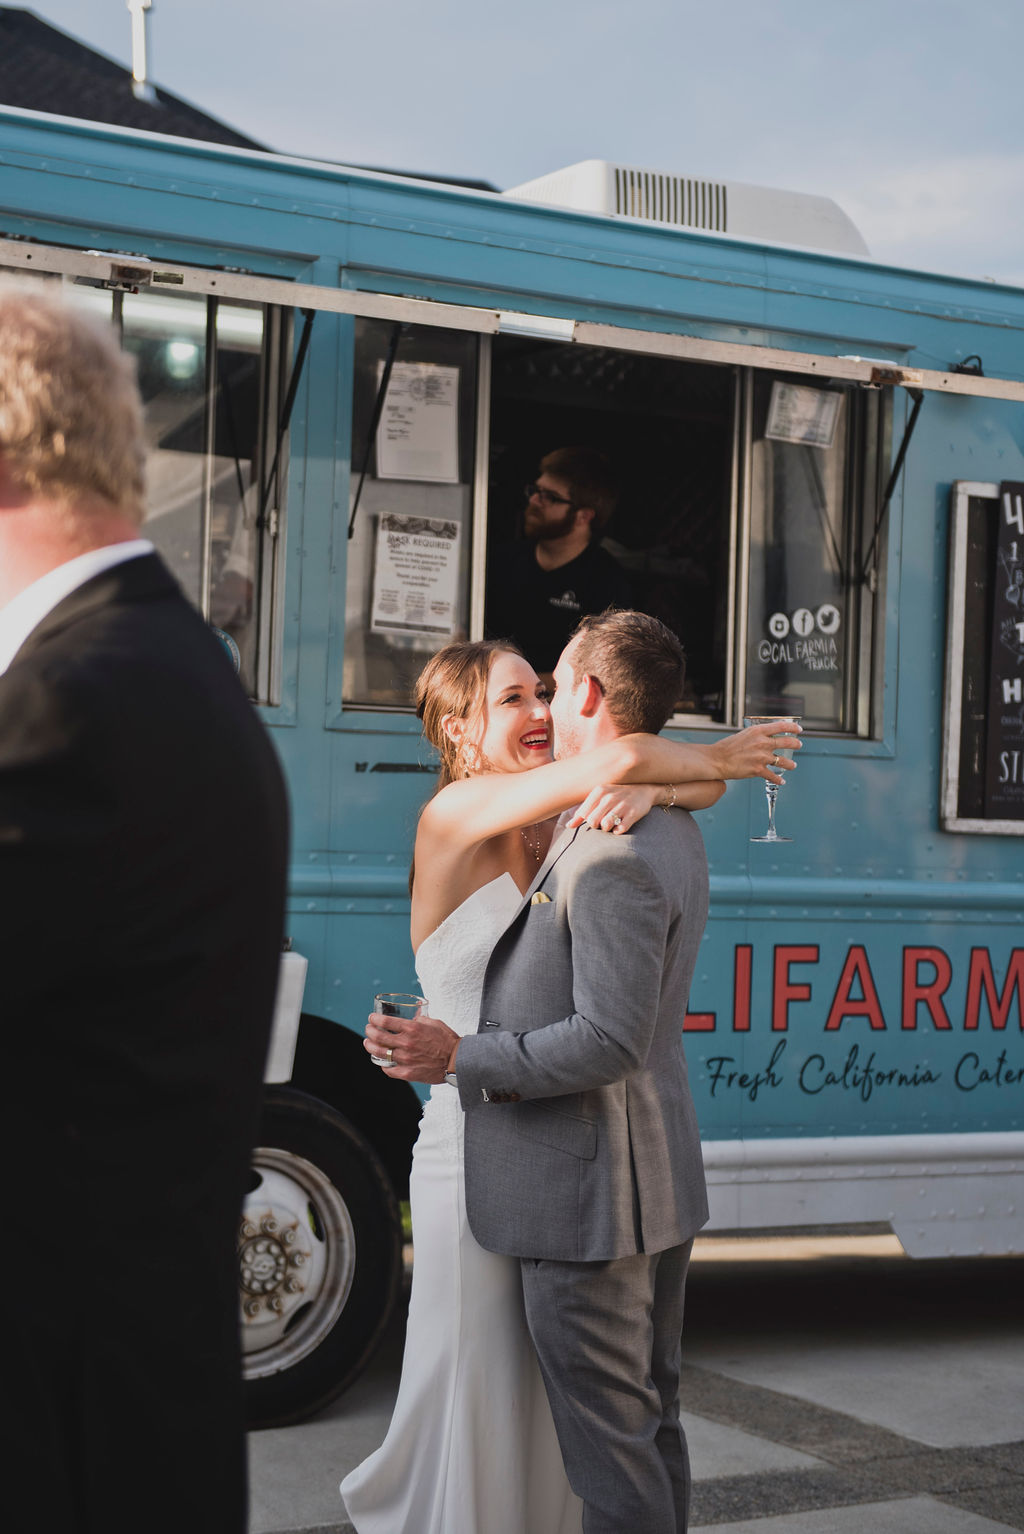 Califarmia food truck for Nashville backyard wedding